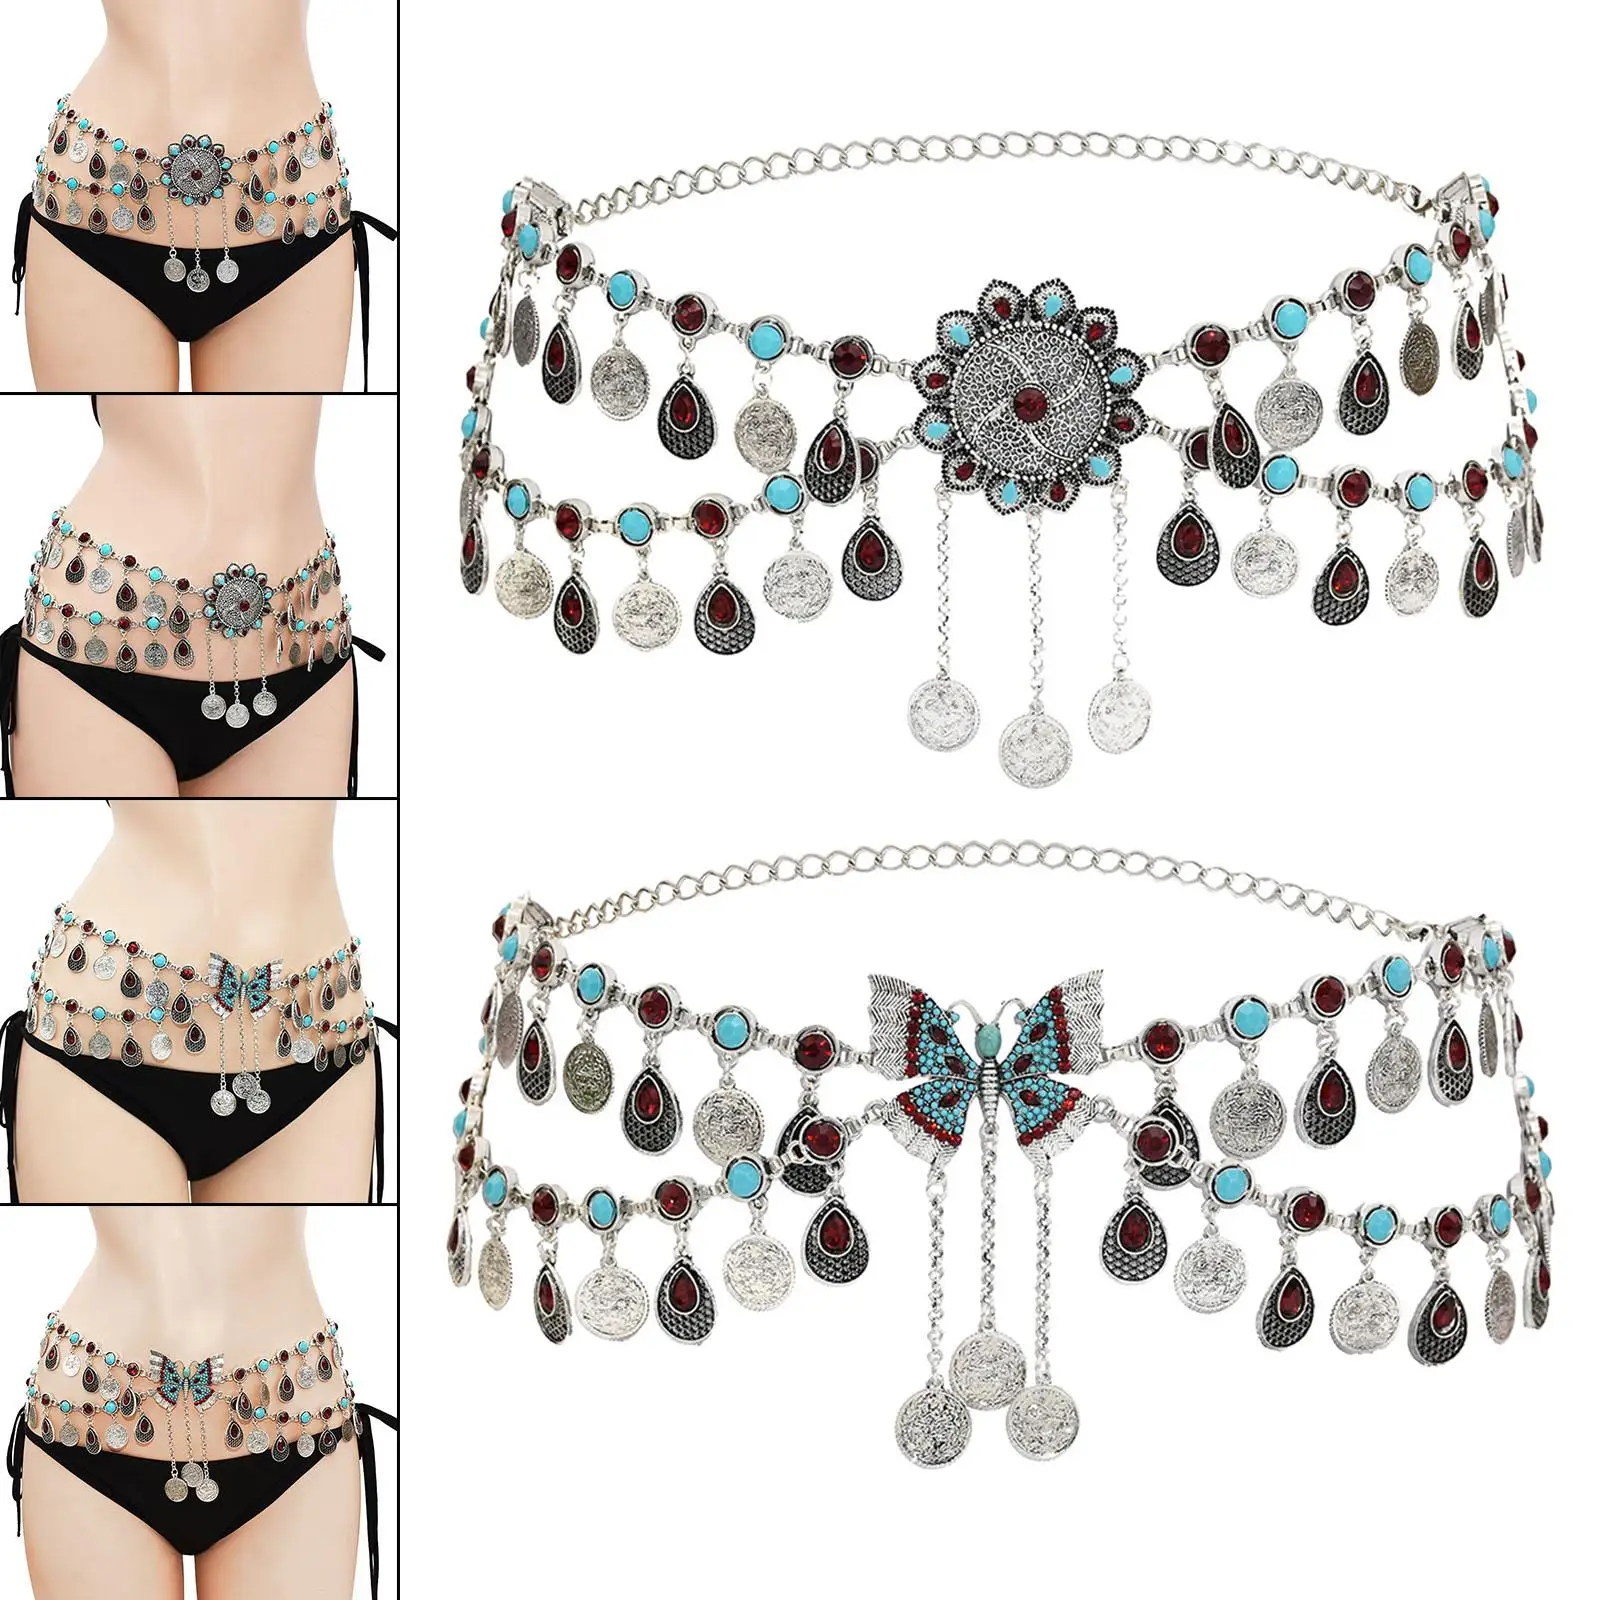 Vintage Belly Body Chain Waist Chain Rhinestone Crystal Nightclub Party Jewelry Coin Pendant Costume Bikini Belt for Women Girls